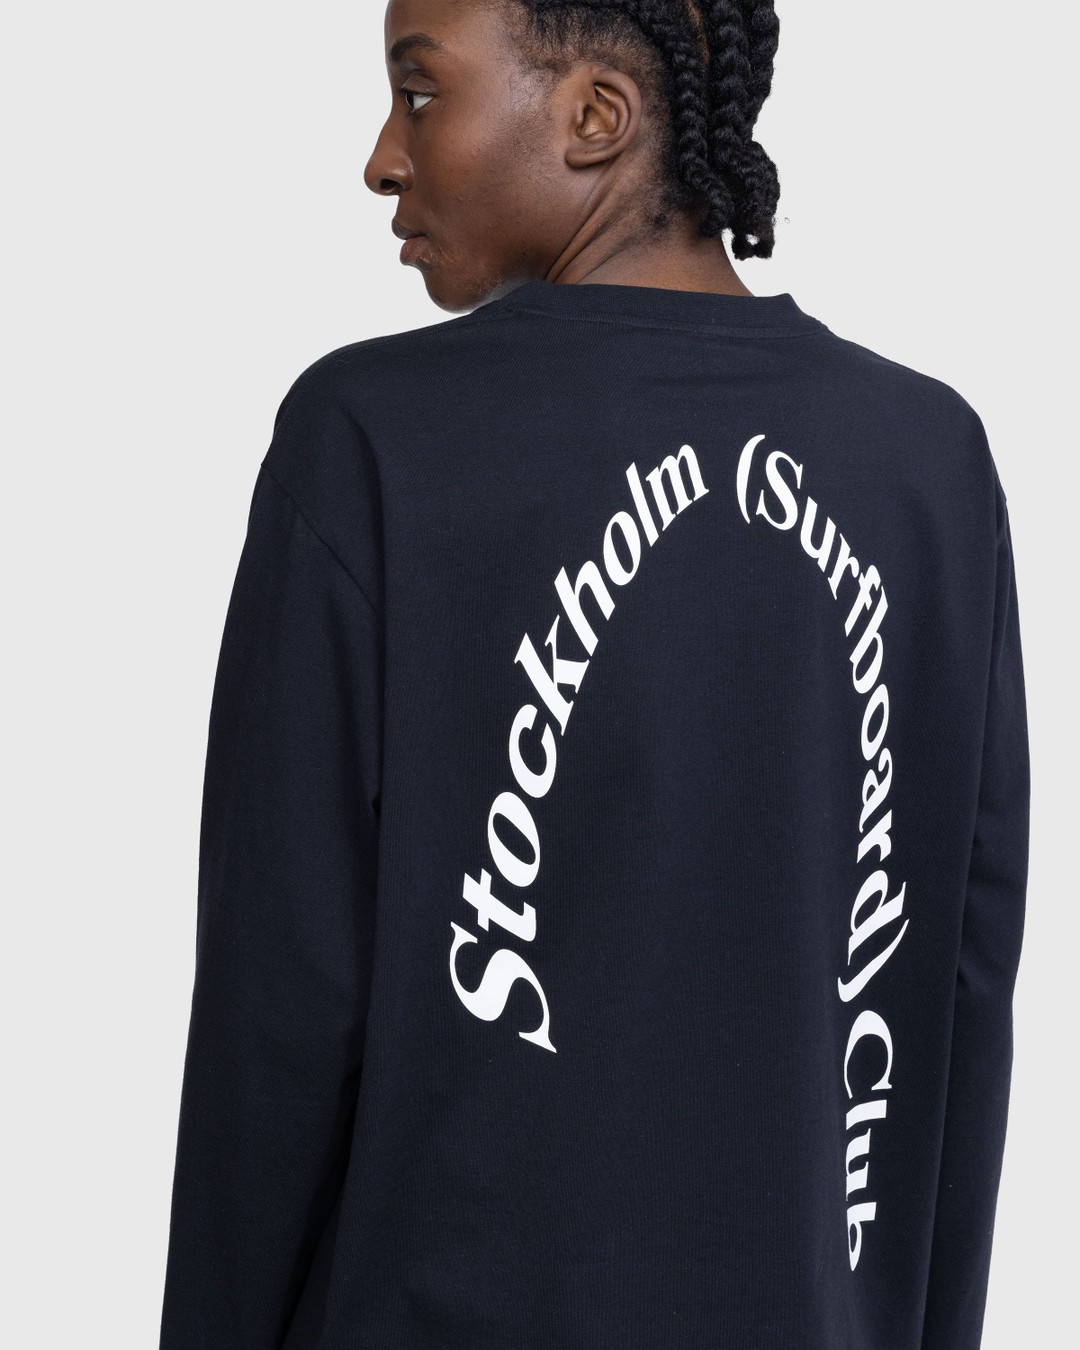 Stockholm Surfboard Club – Logo Longsleeve Black | Highsnobiety Shop